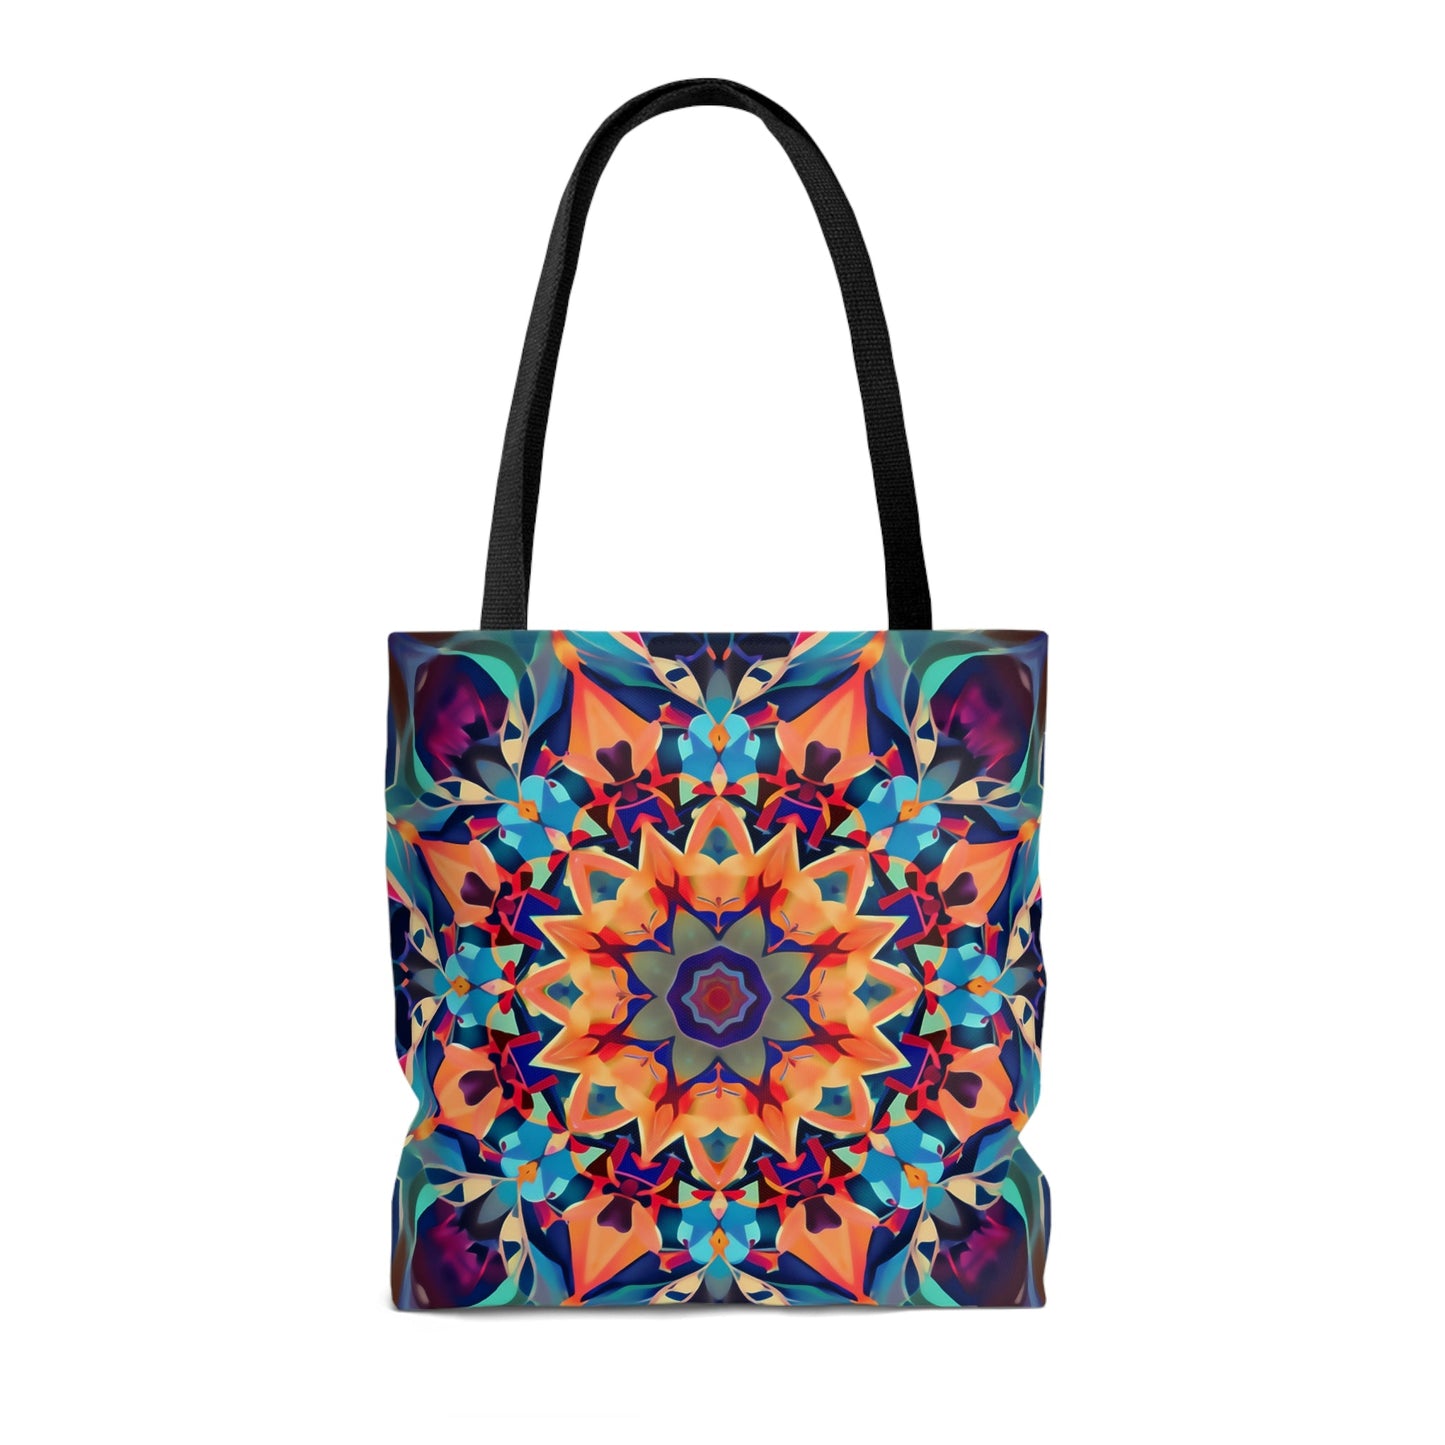 BOHO Abstract Mandala Design on Tote Bag